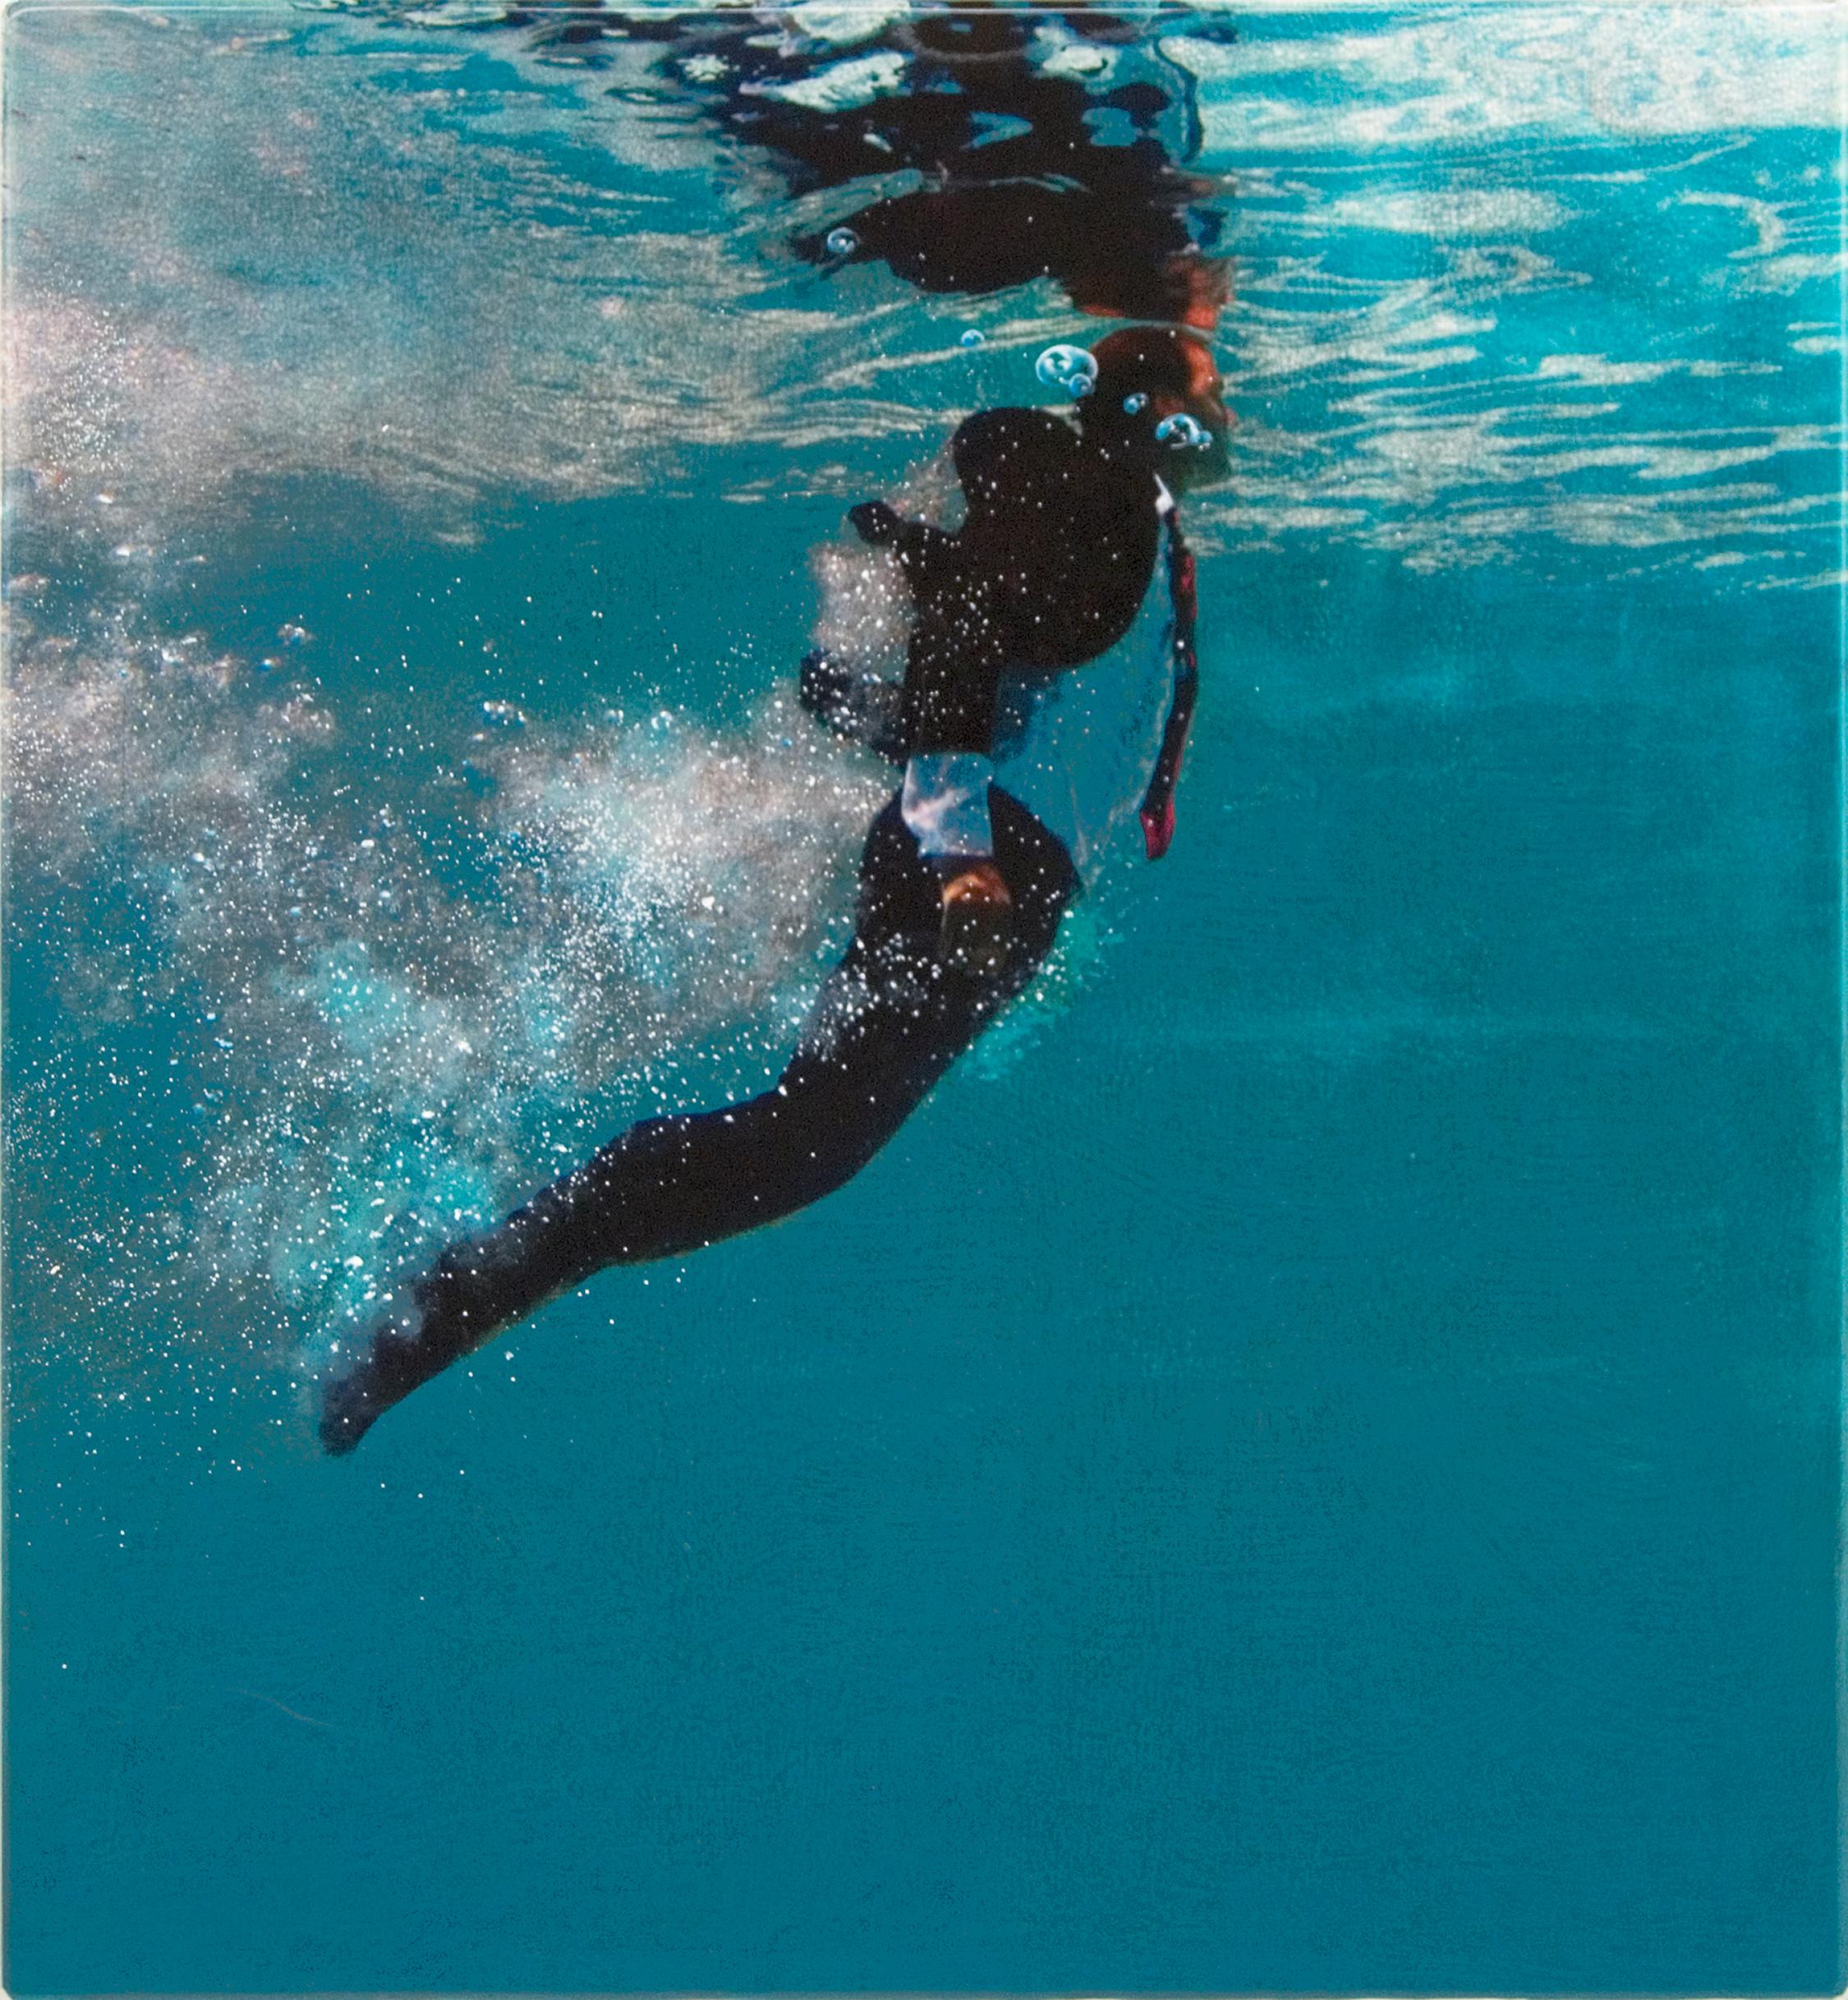 Eric Zener Figurative Painting - LOOKING AHEAD, man in water, photorealism, underwater, swimmer